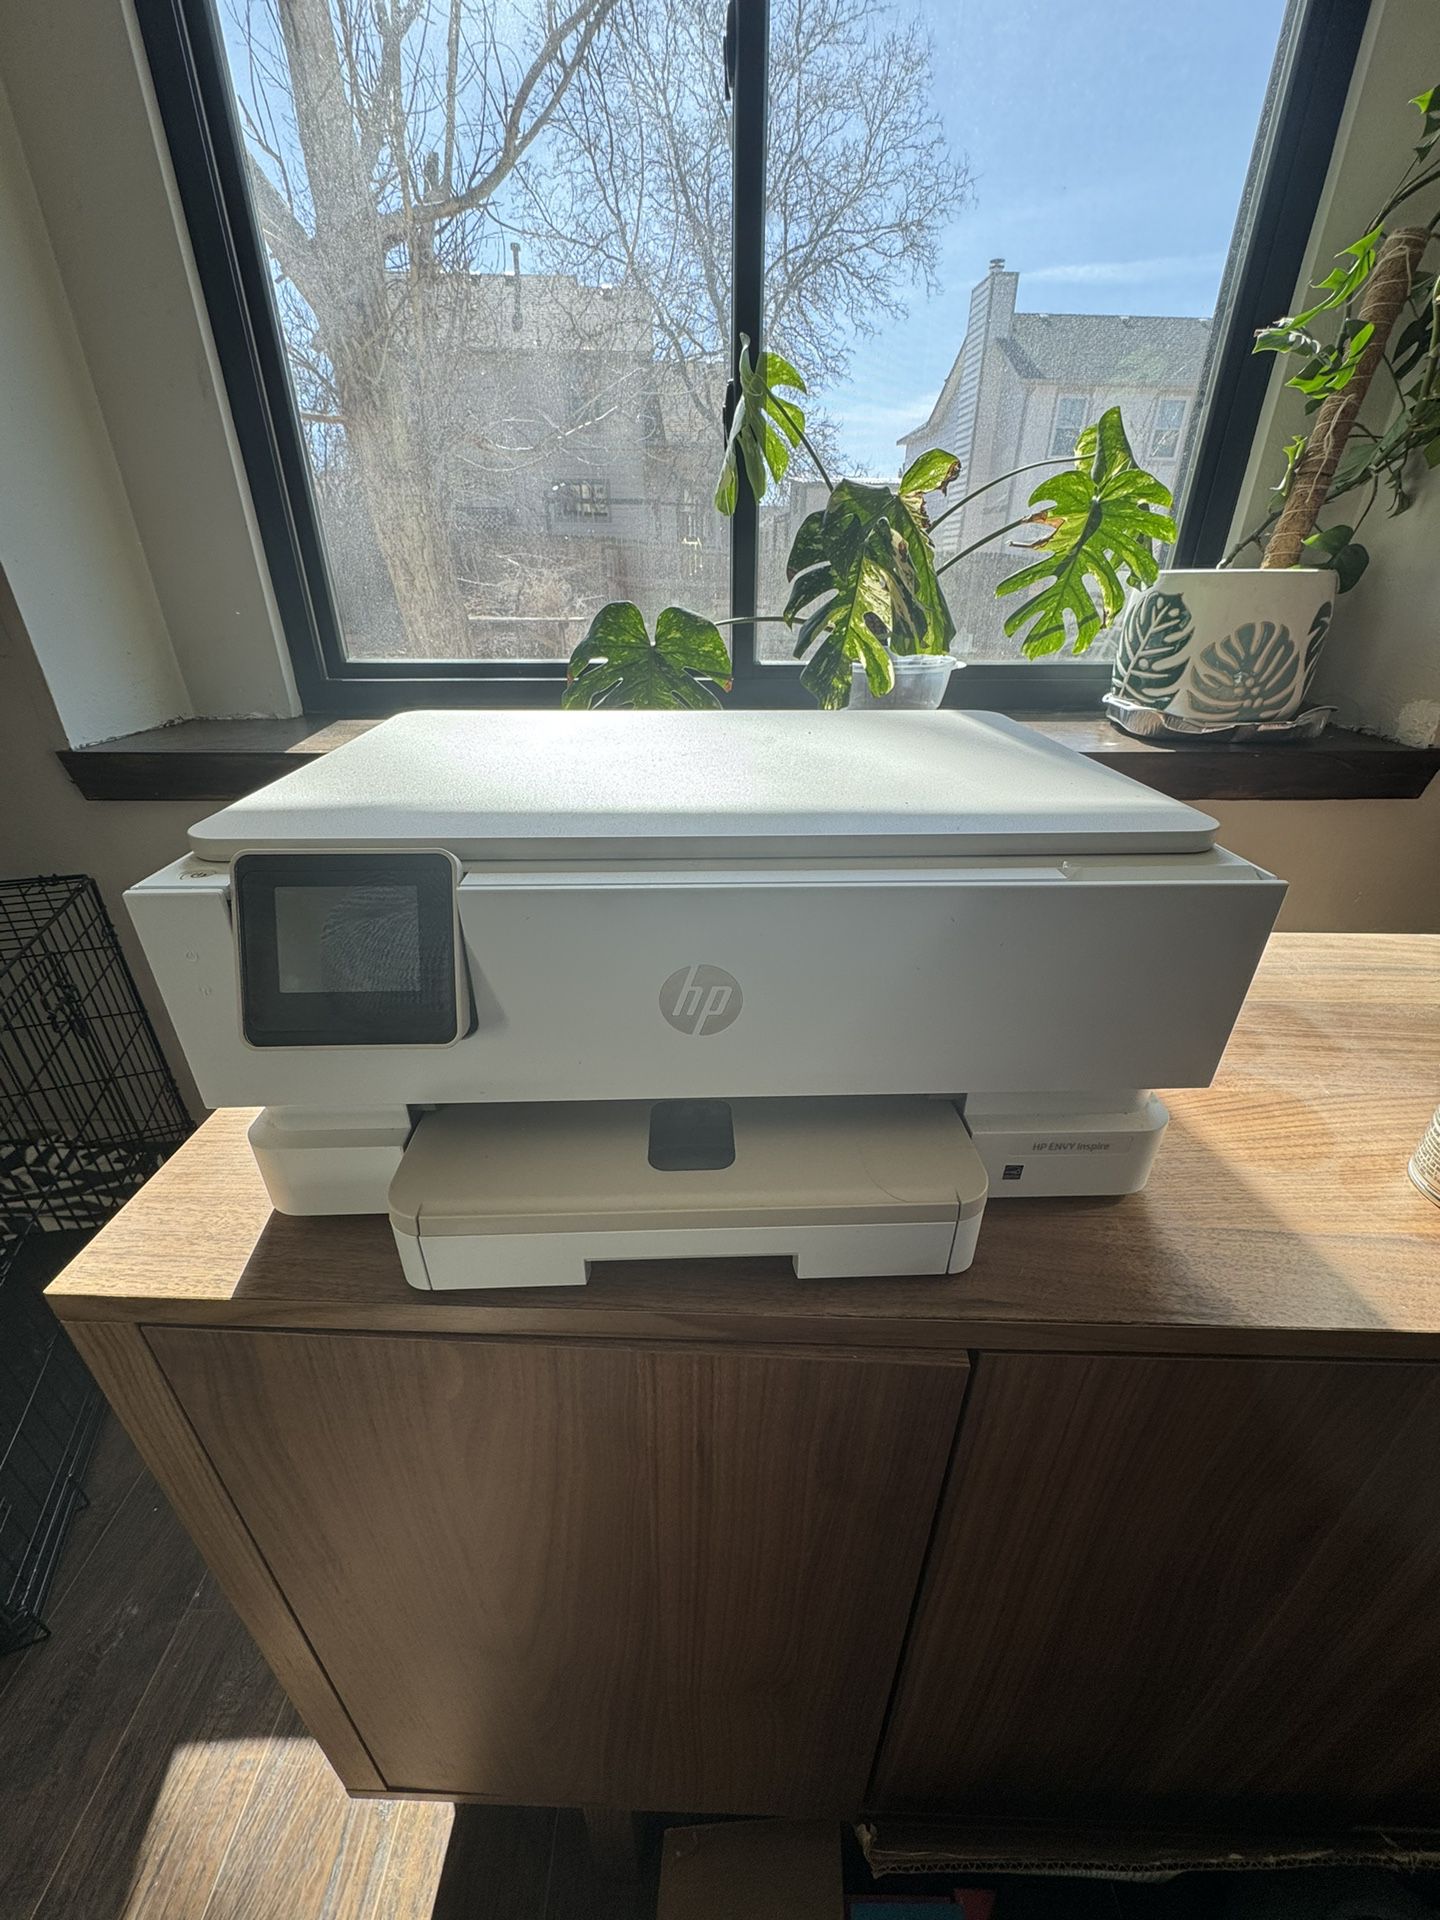 HP Envy Printer